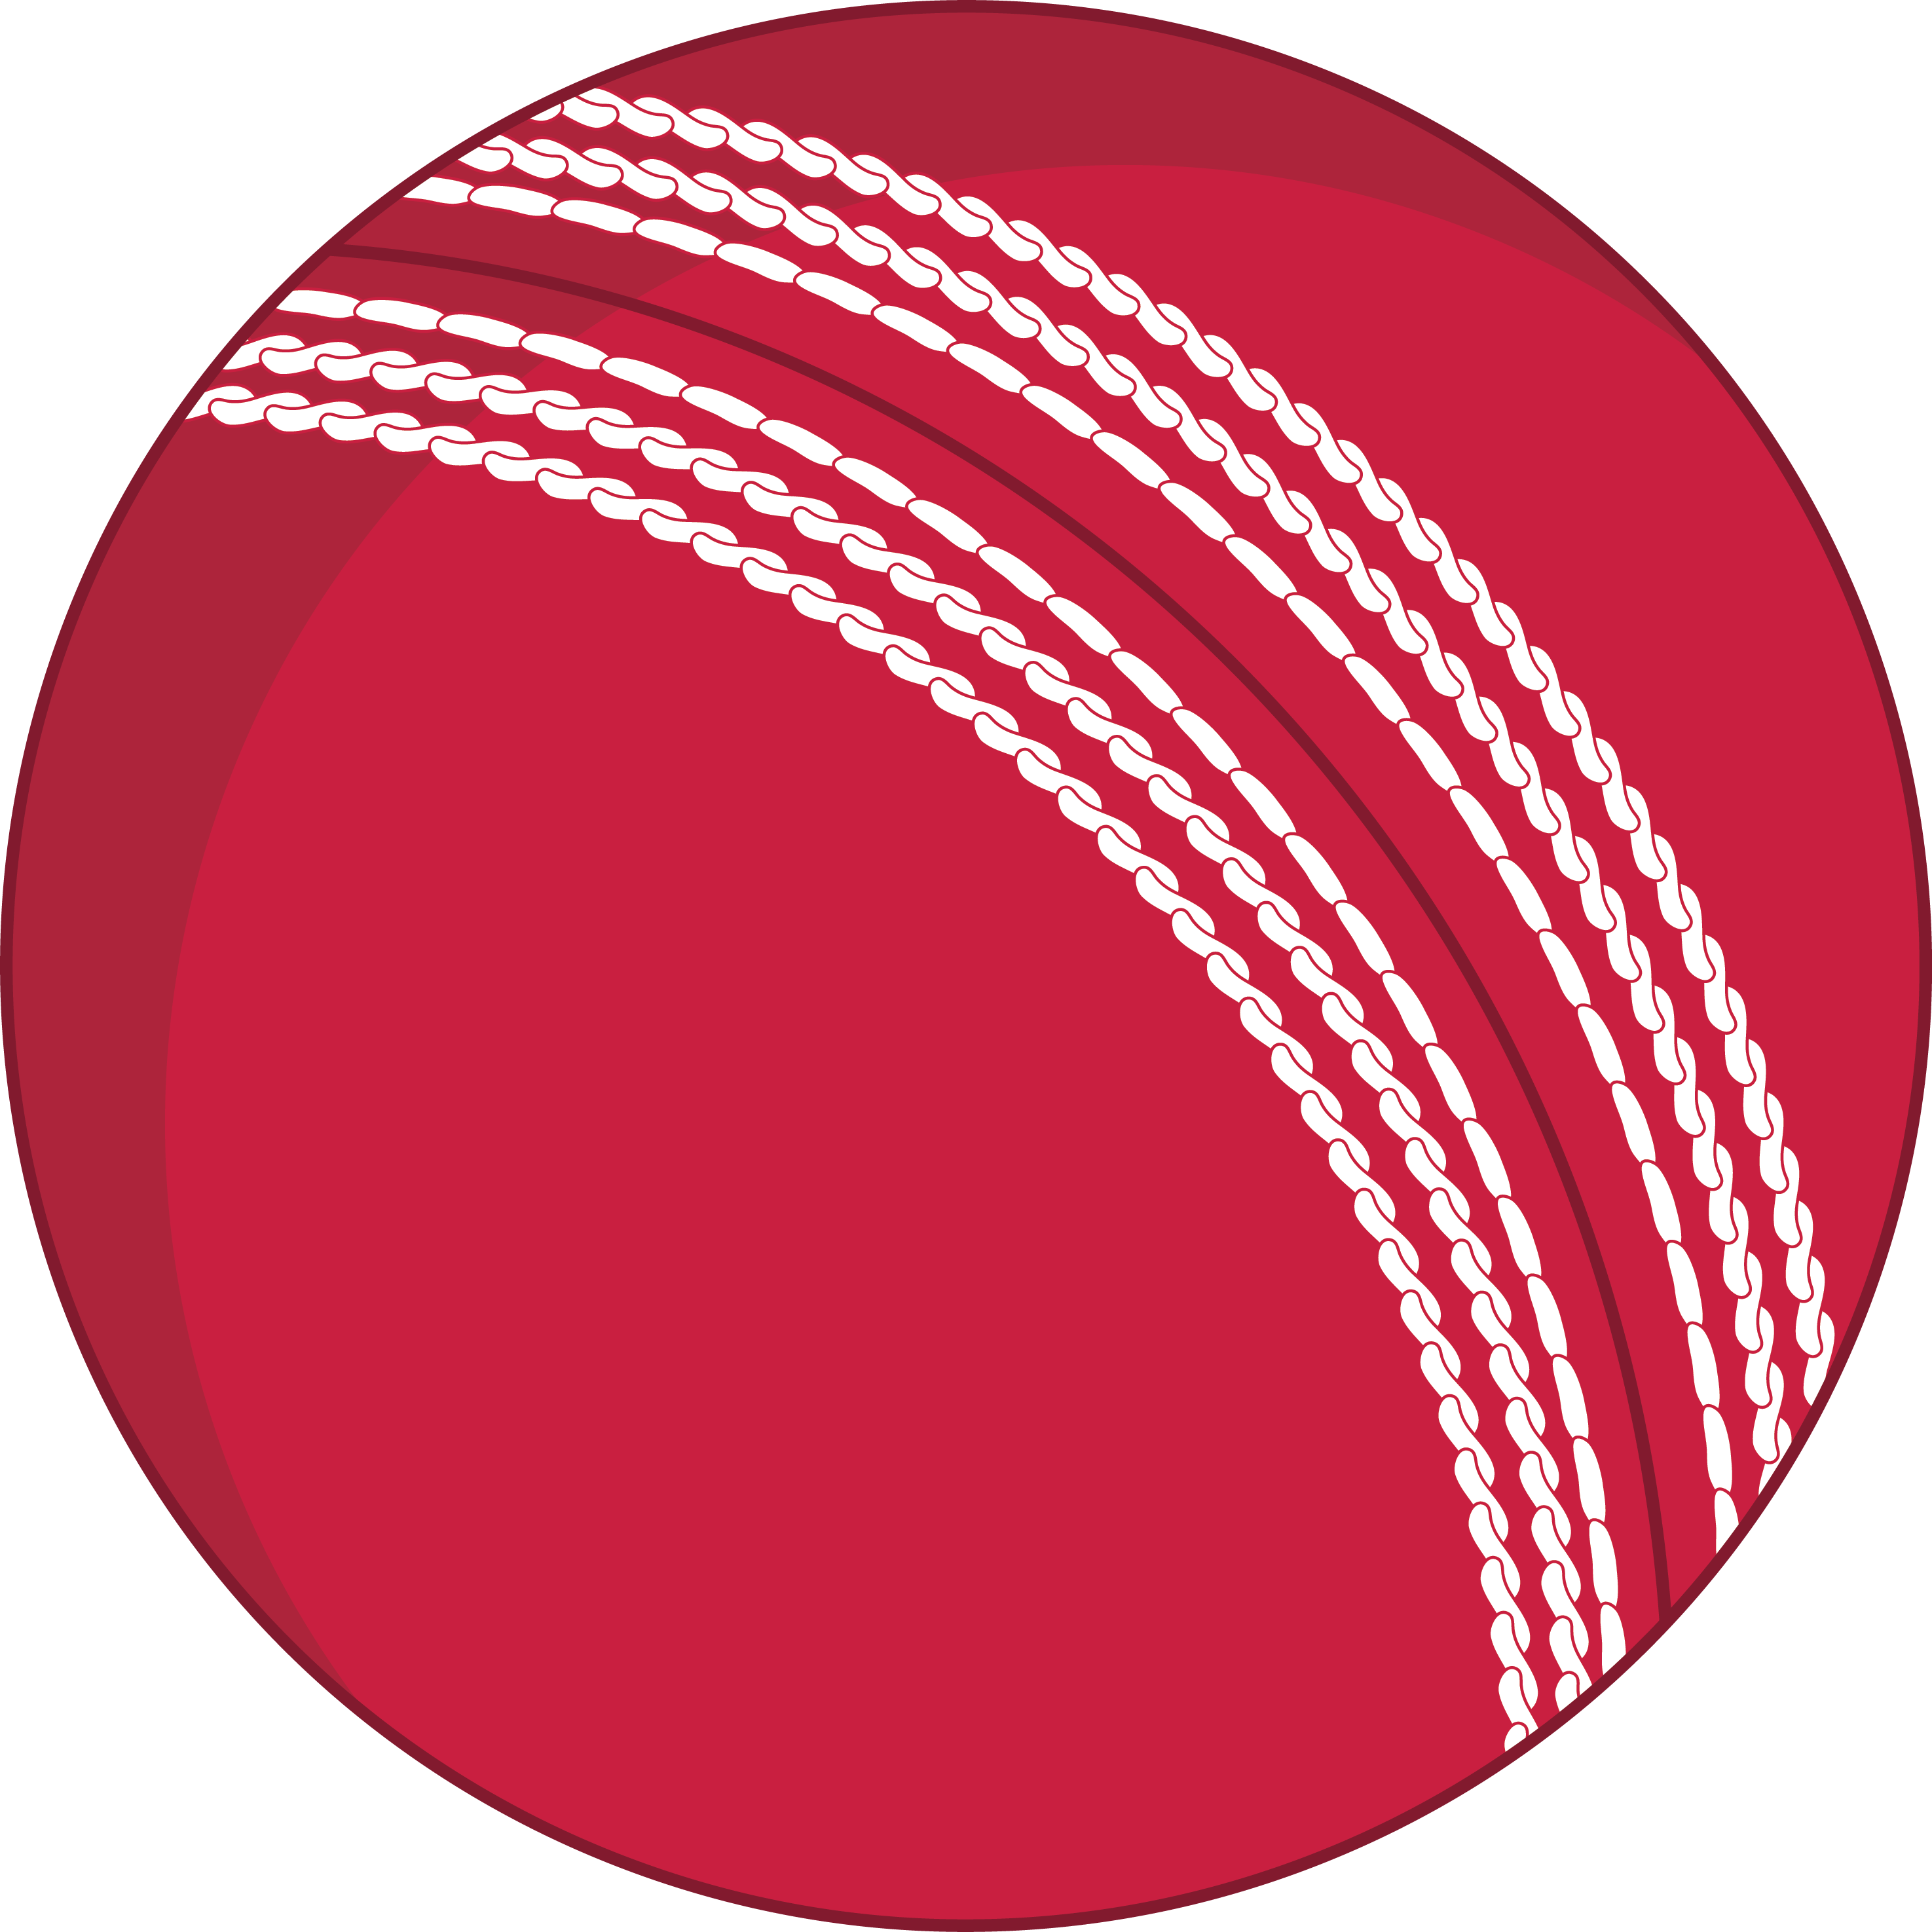 Cricket Ball PNG HD Quality